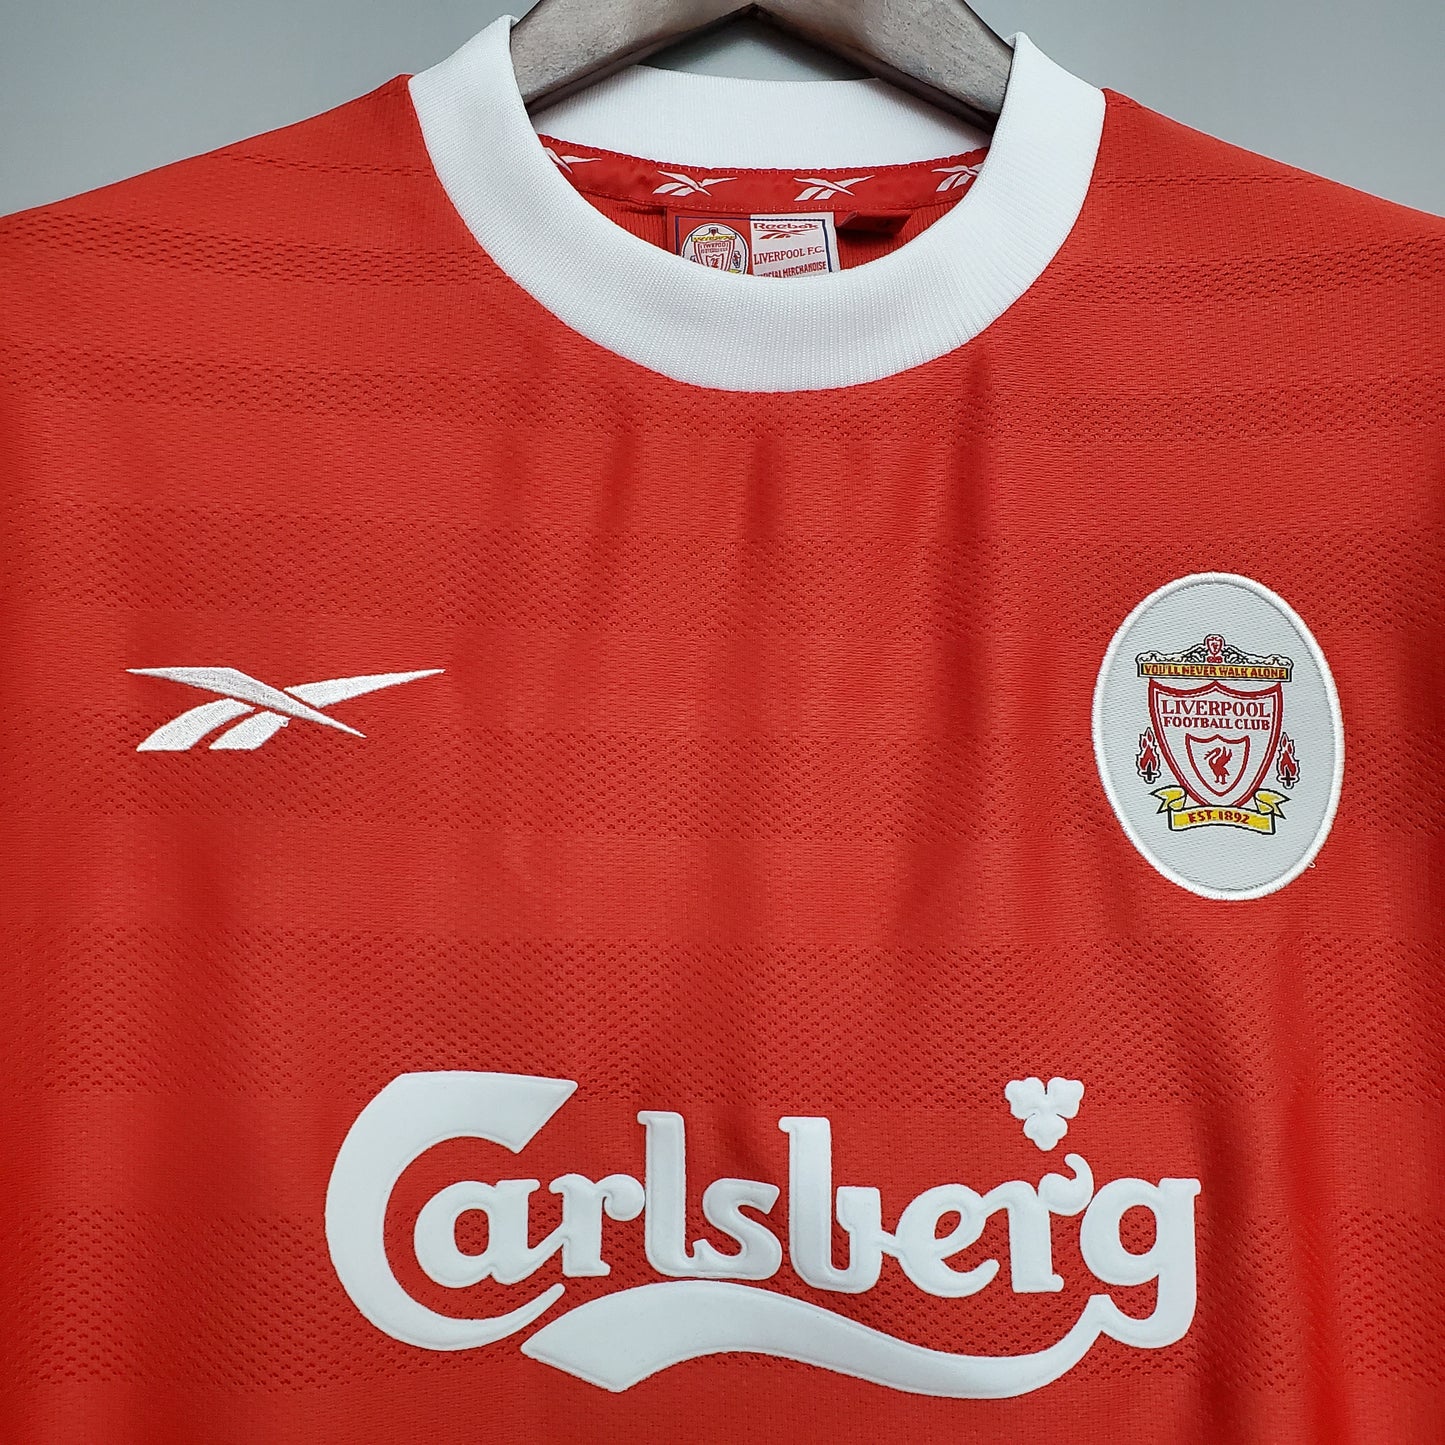 1998/99 Liverpool Home Shirt